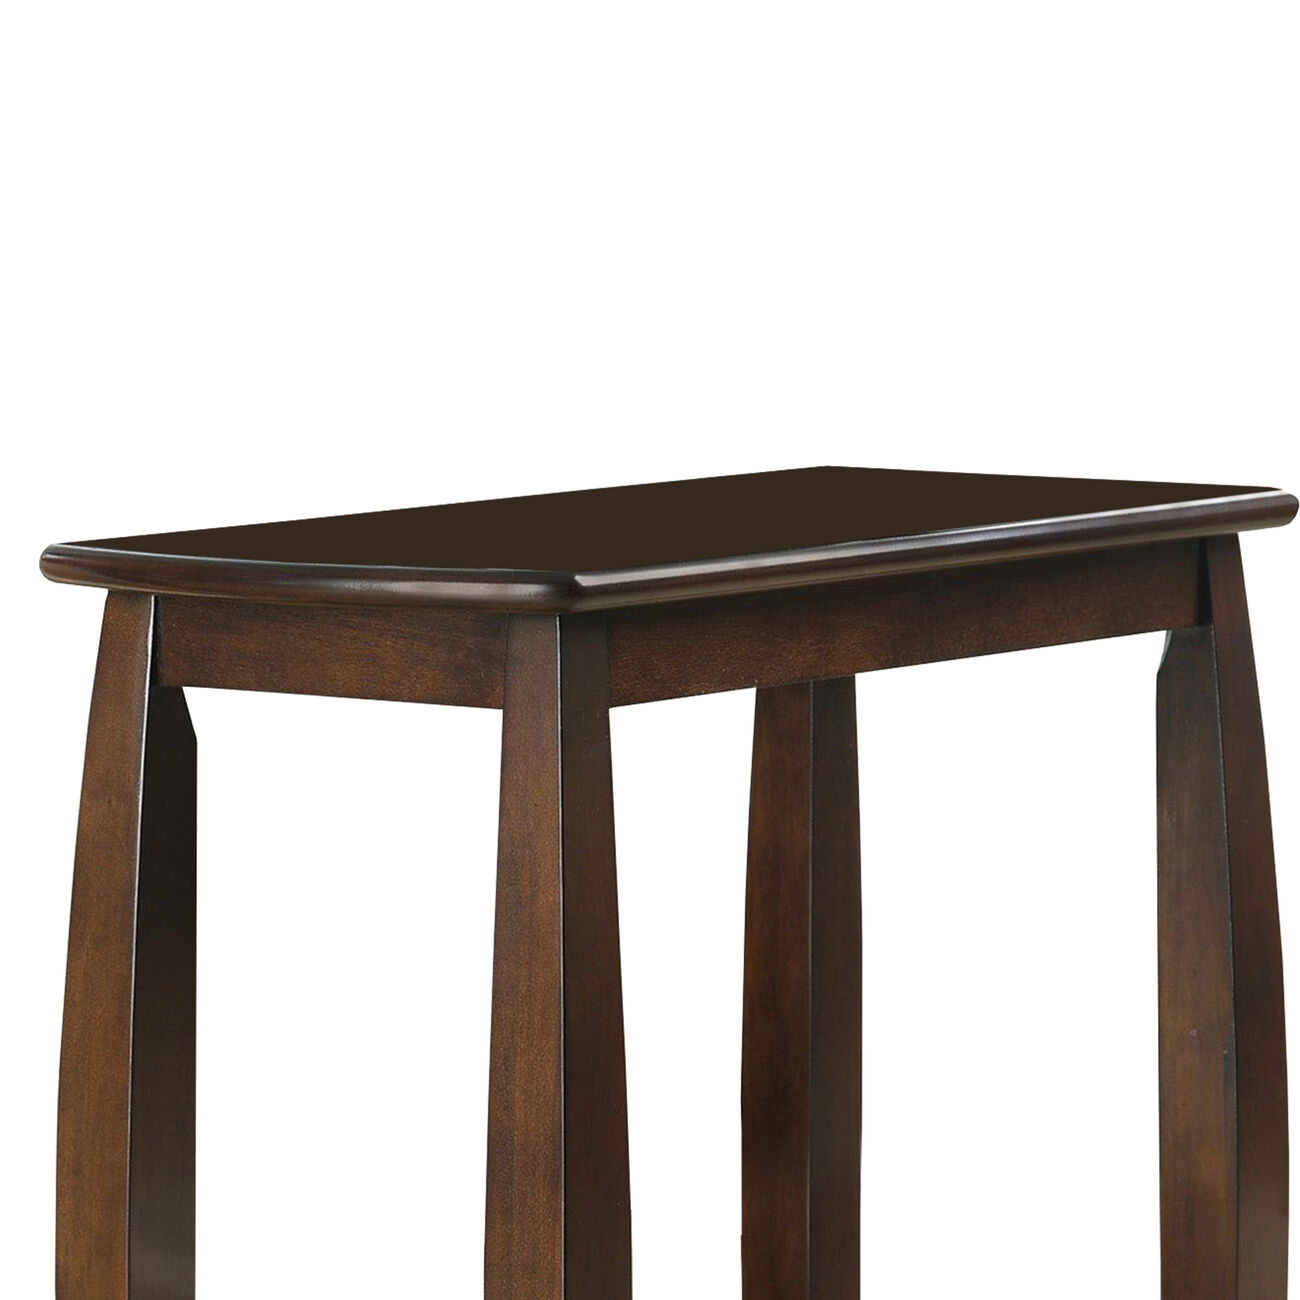 Elegant Wooden Chair Side Table, Brown